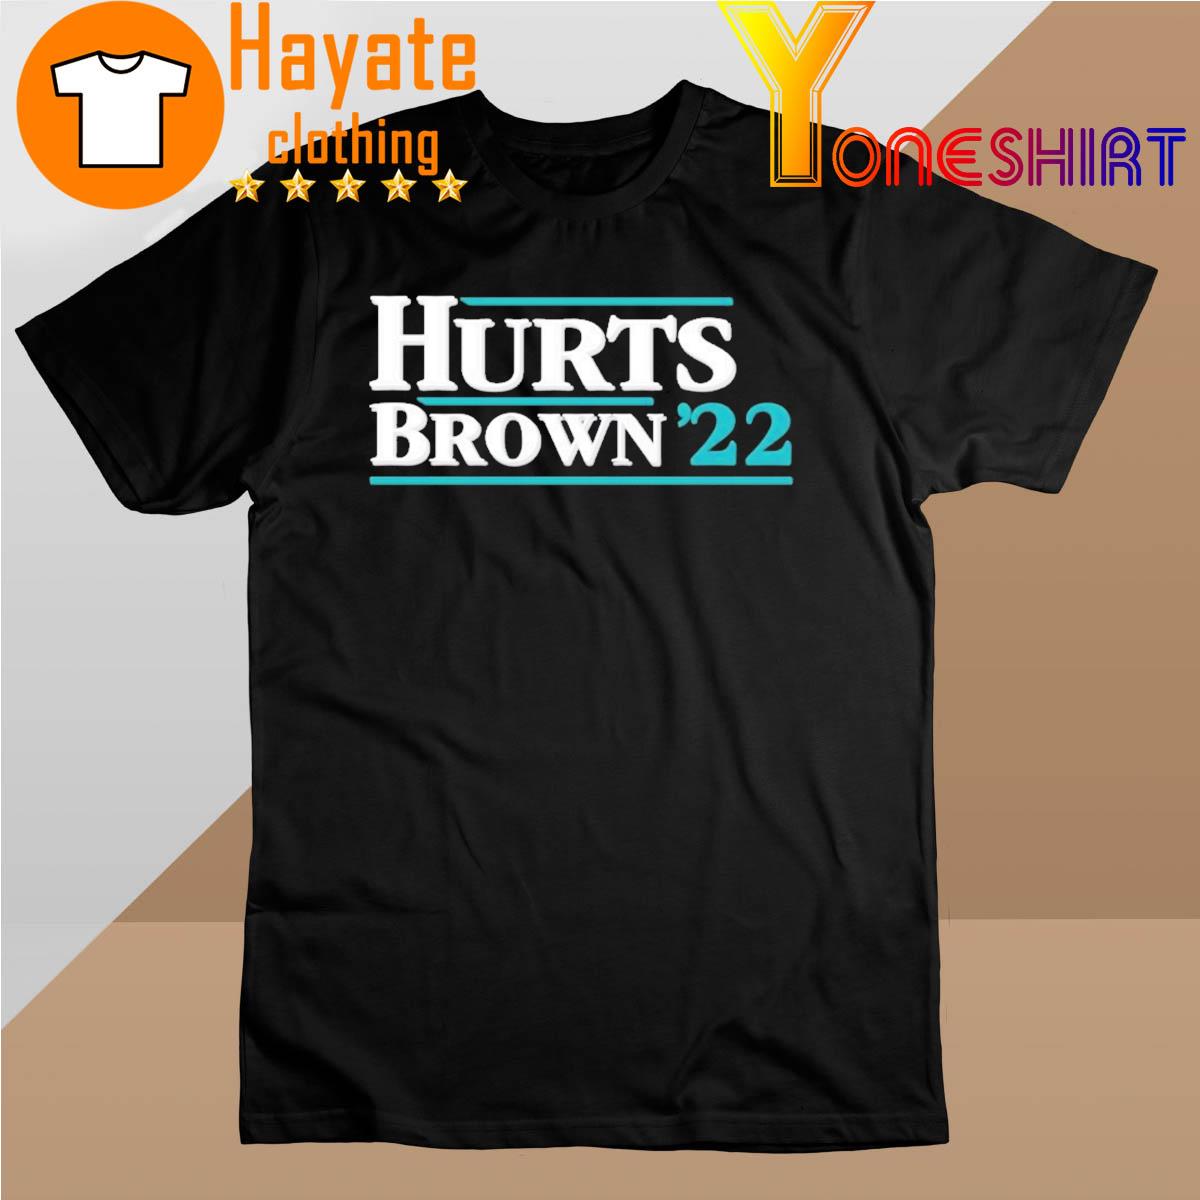 Hurts Brown 22 shirt